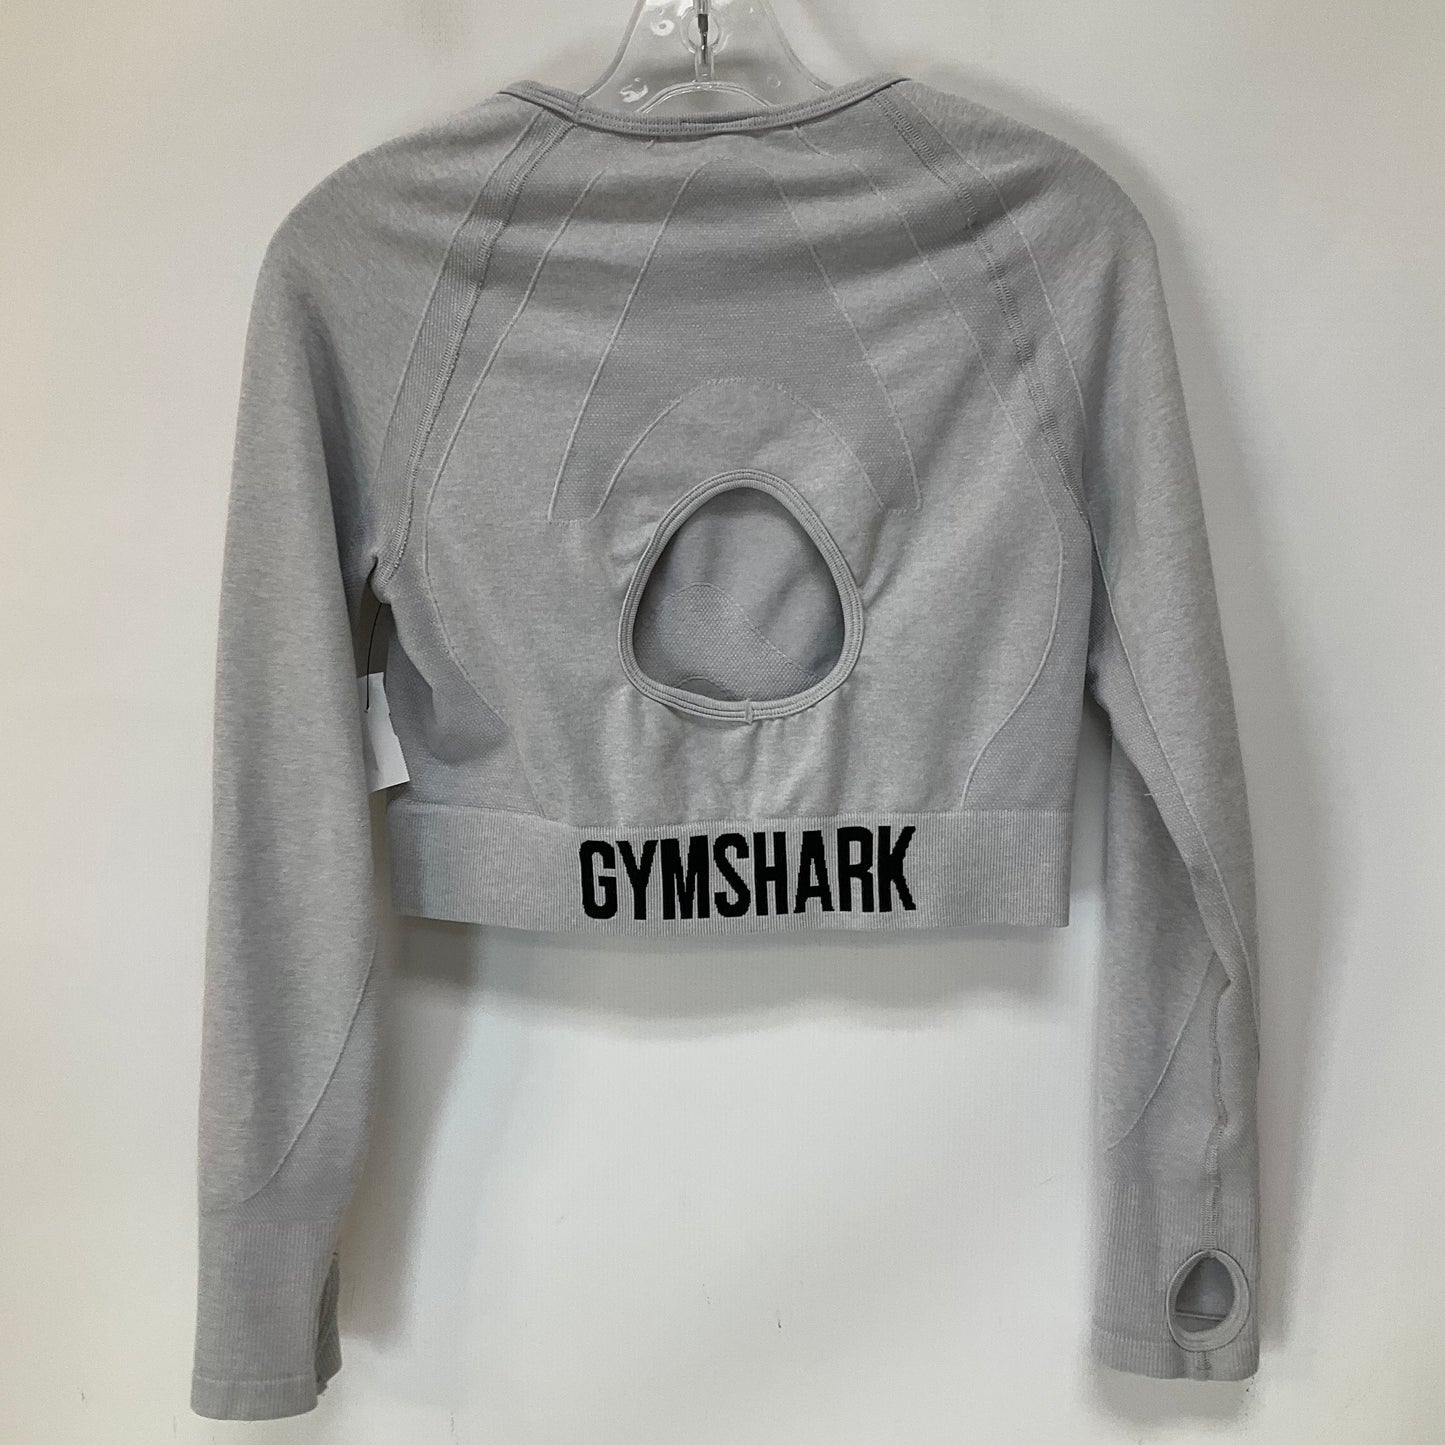 Grey Athletic Top Long Sleeve Crewneck Gym Shark, Size Xl